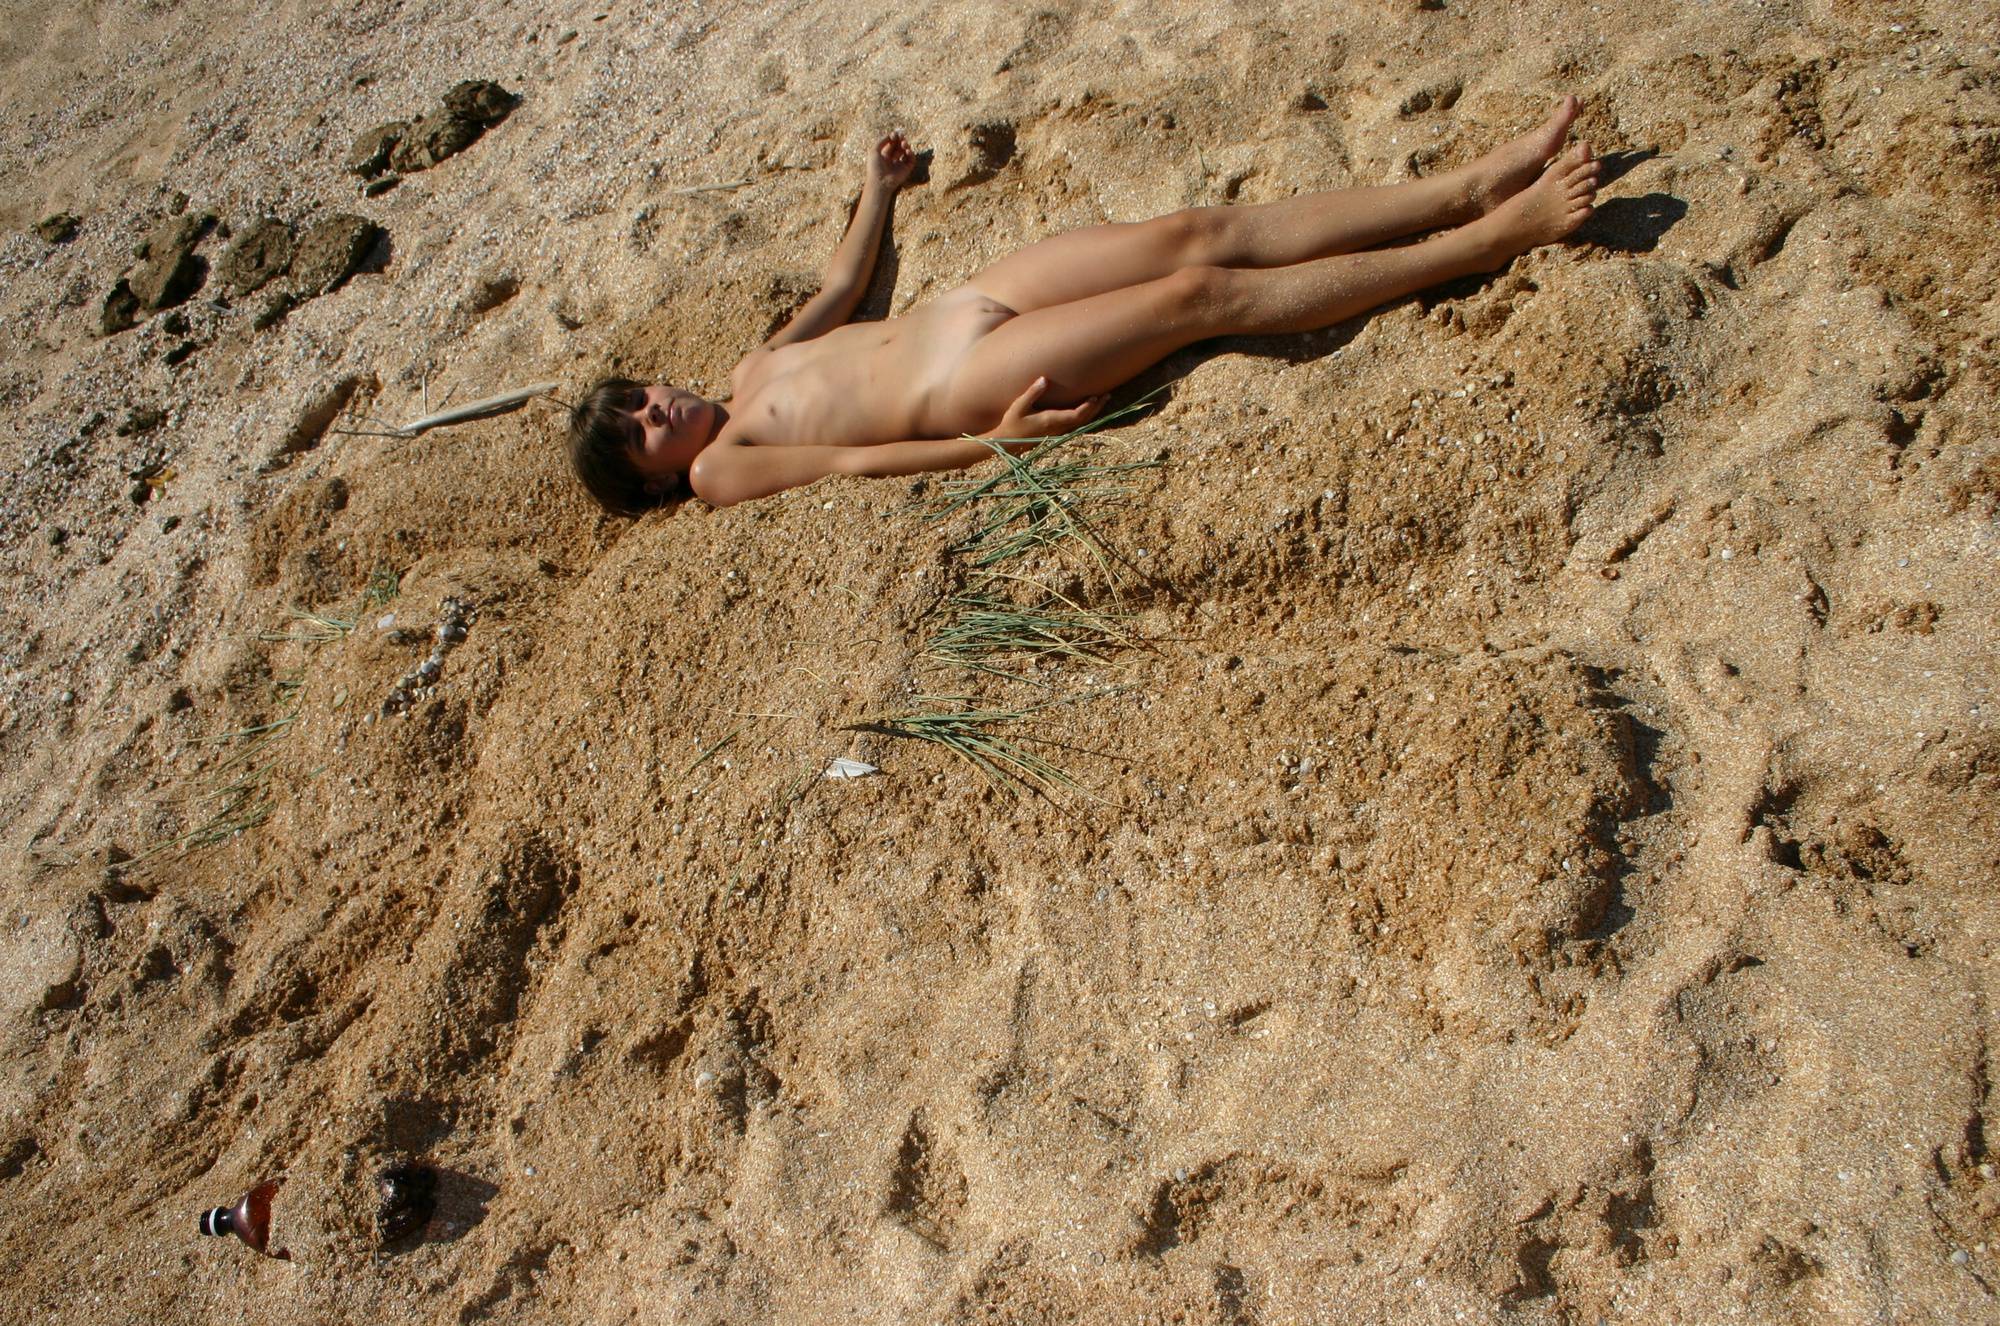 Naturist Beach Sand Kings - 1